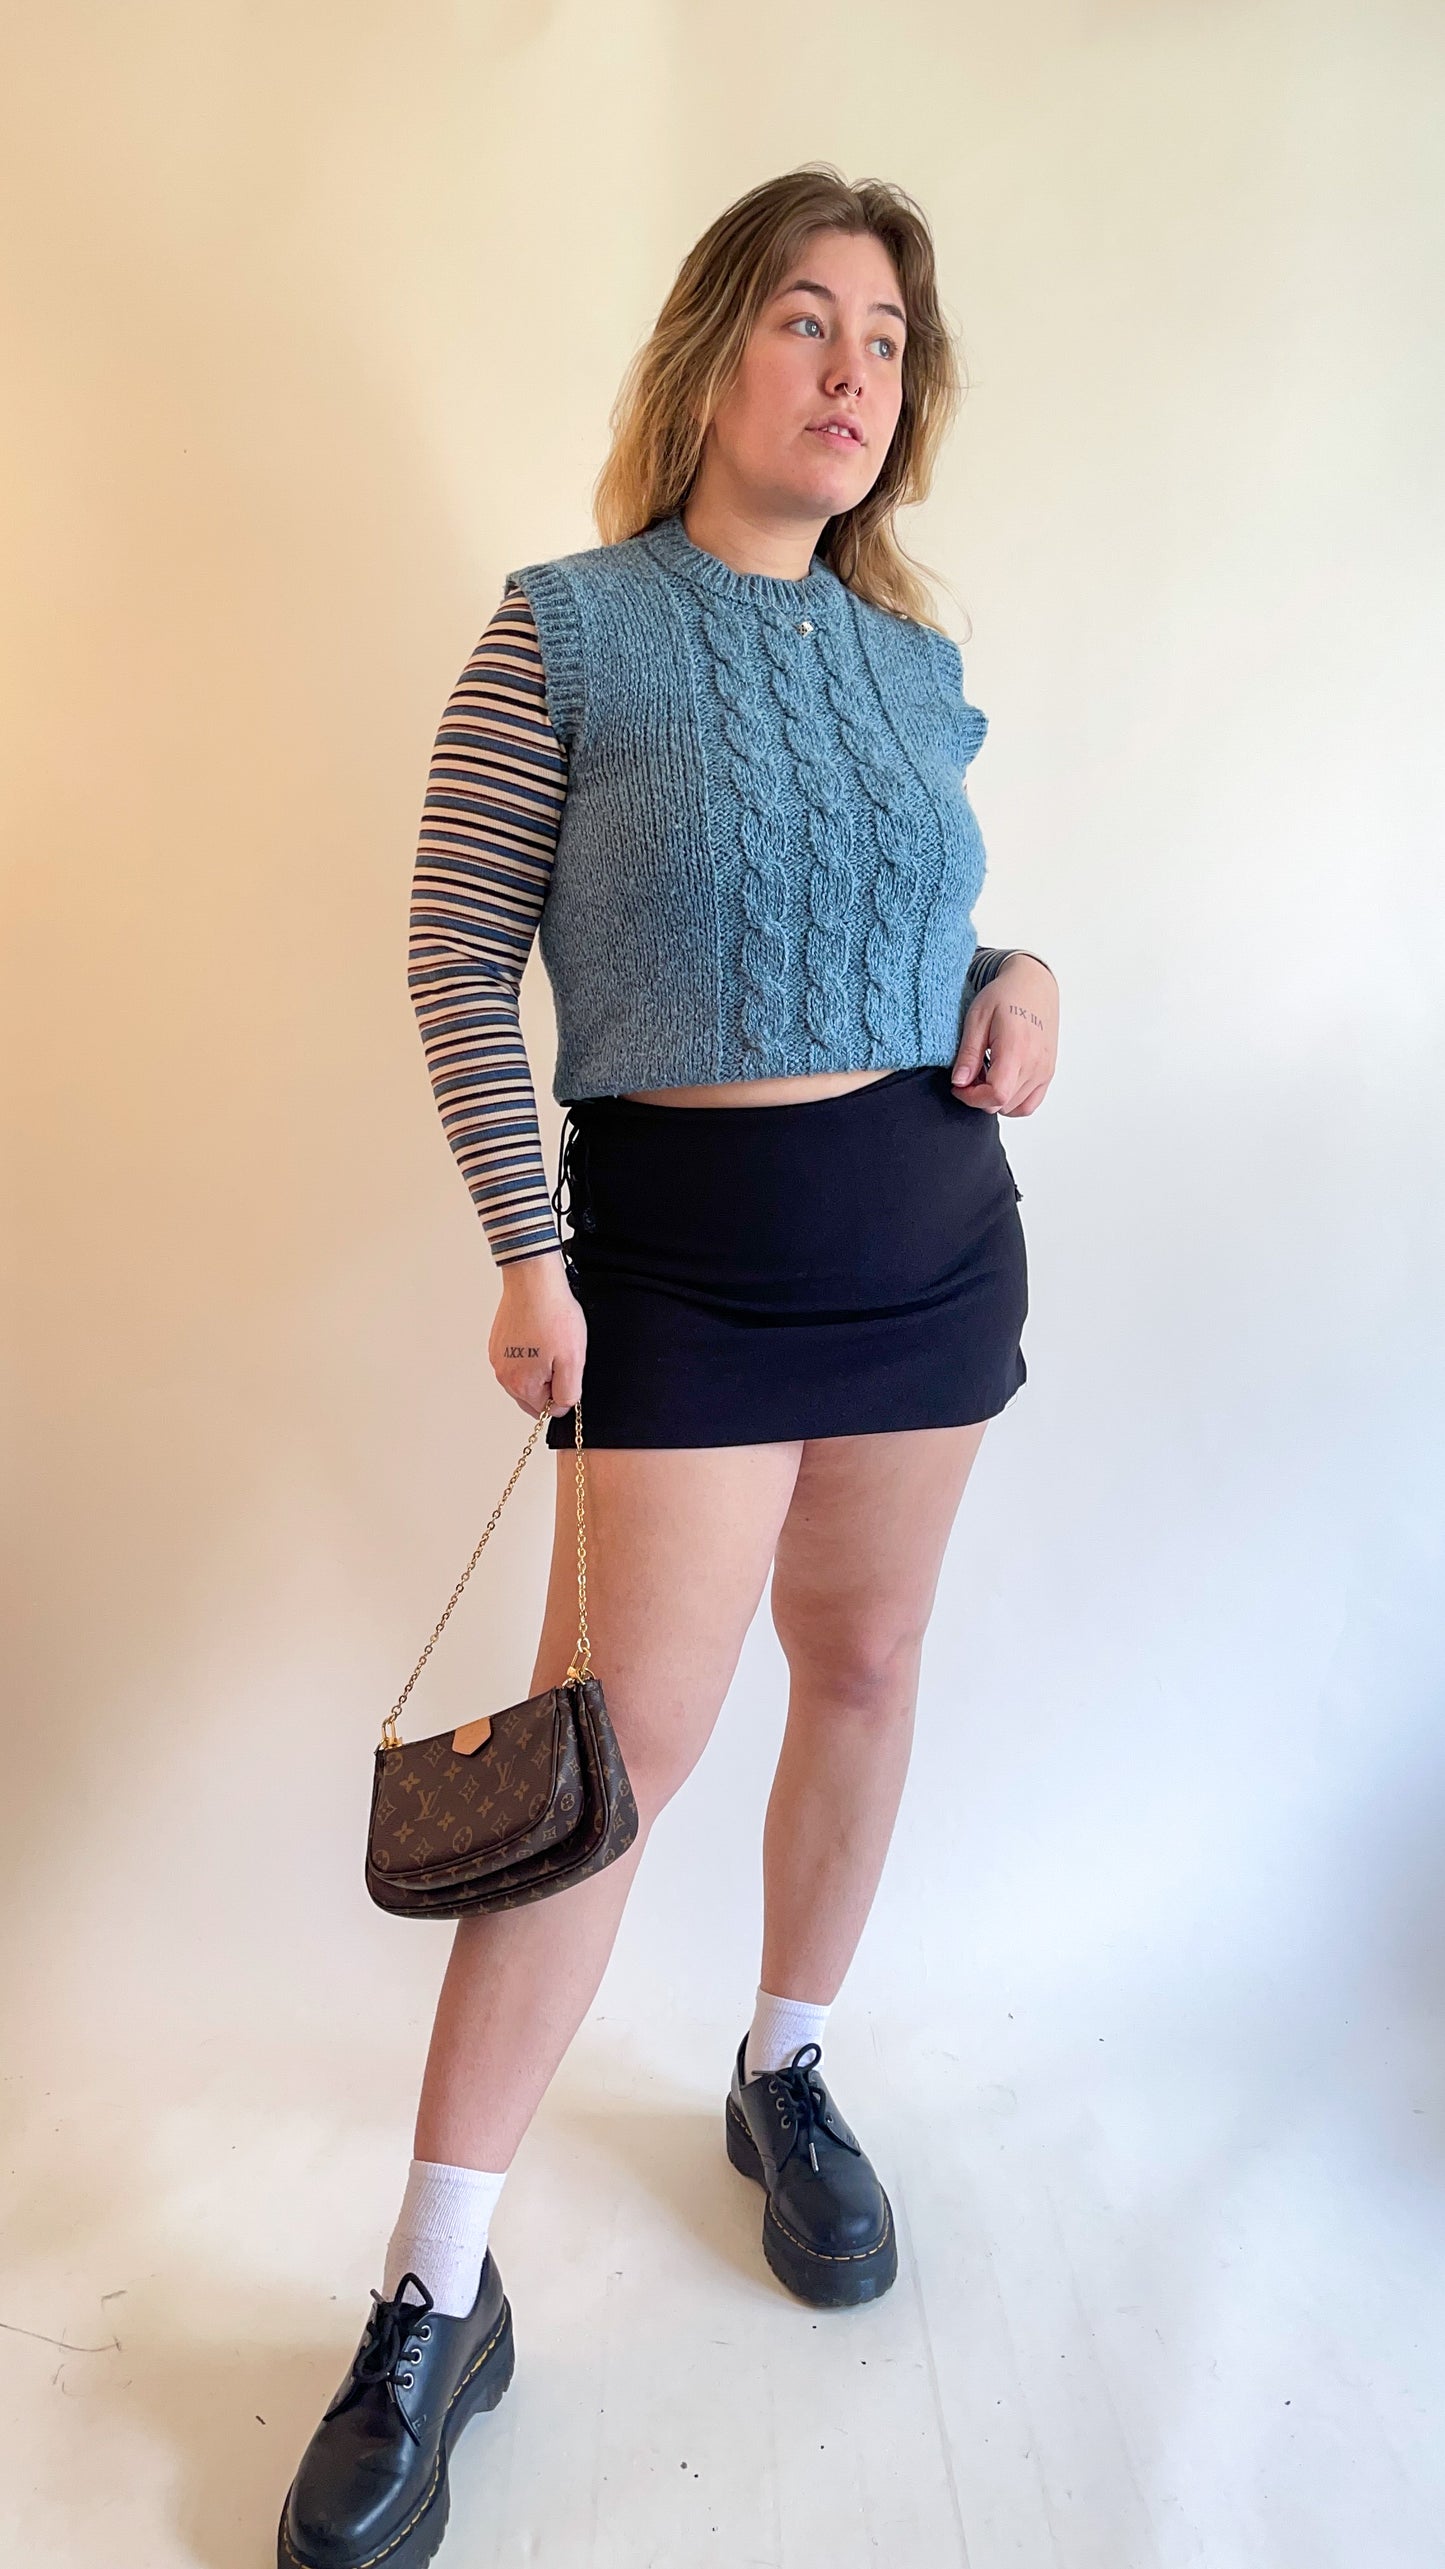 80s Powder Blue Knit Sweater Vest (M)